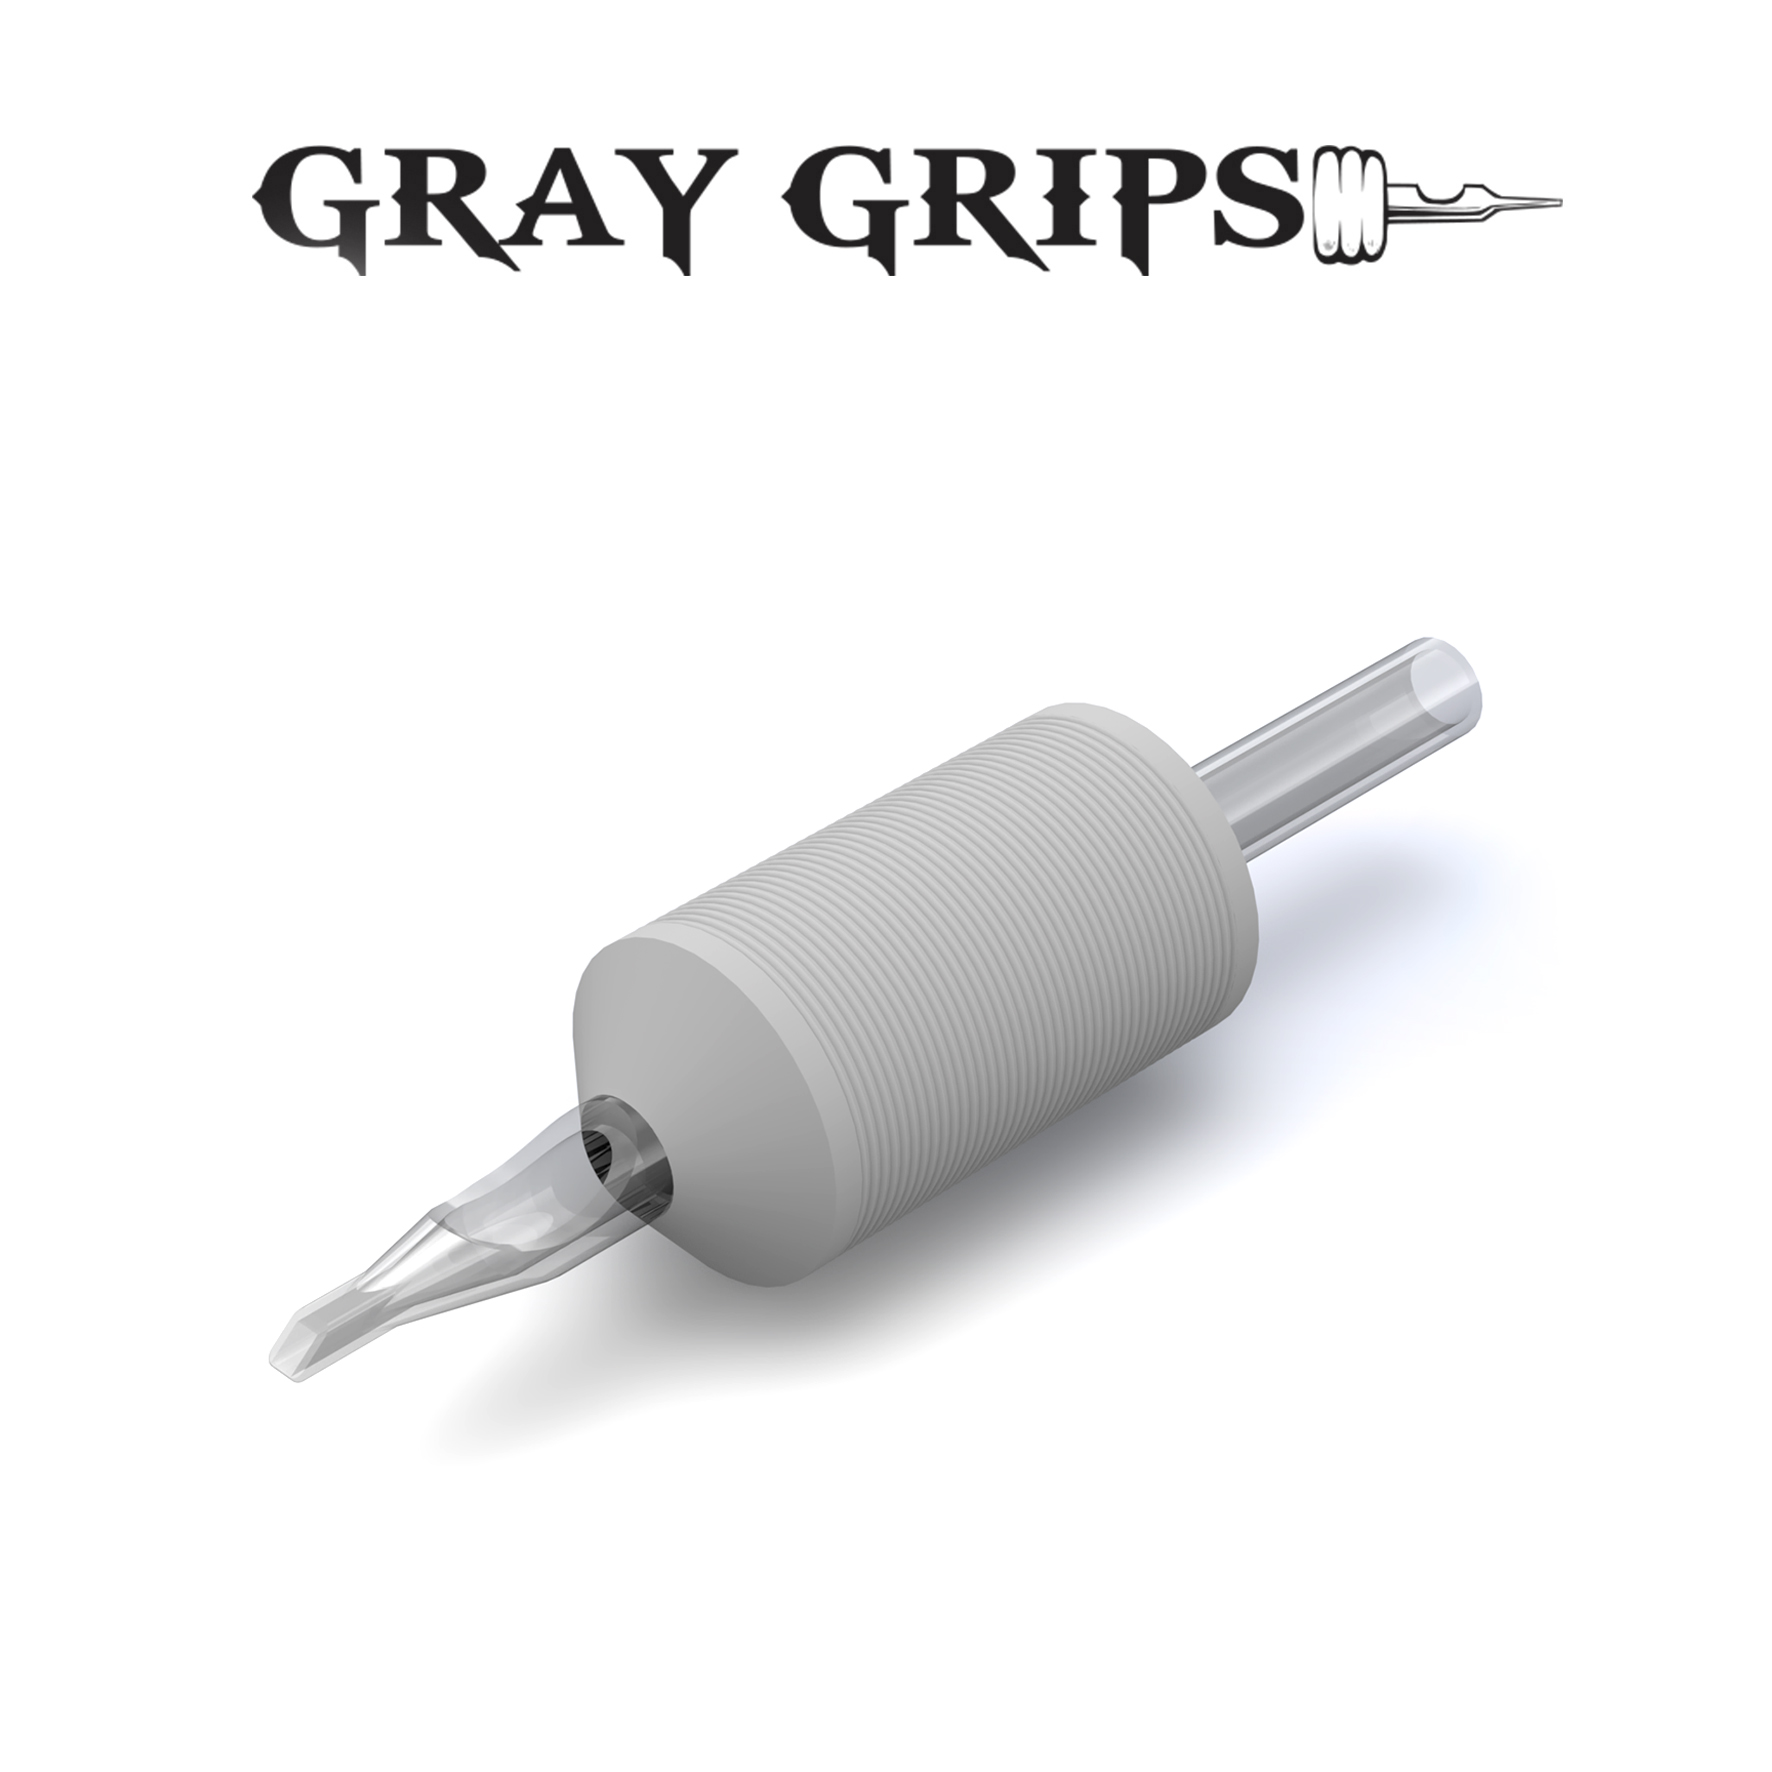 Gray Grips™